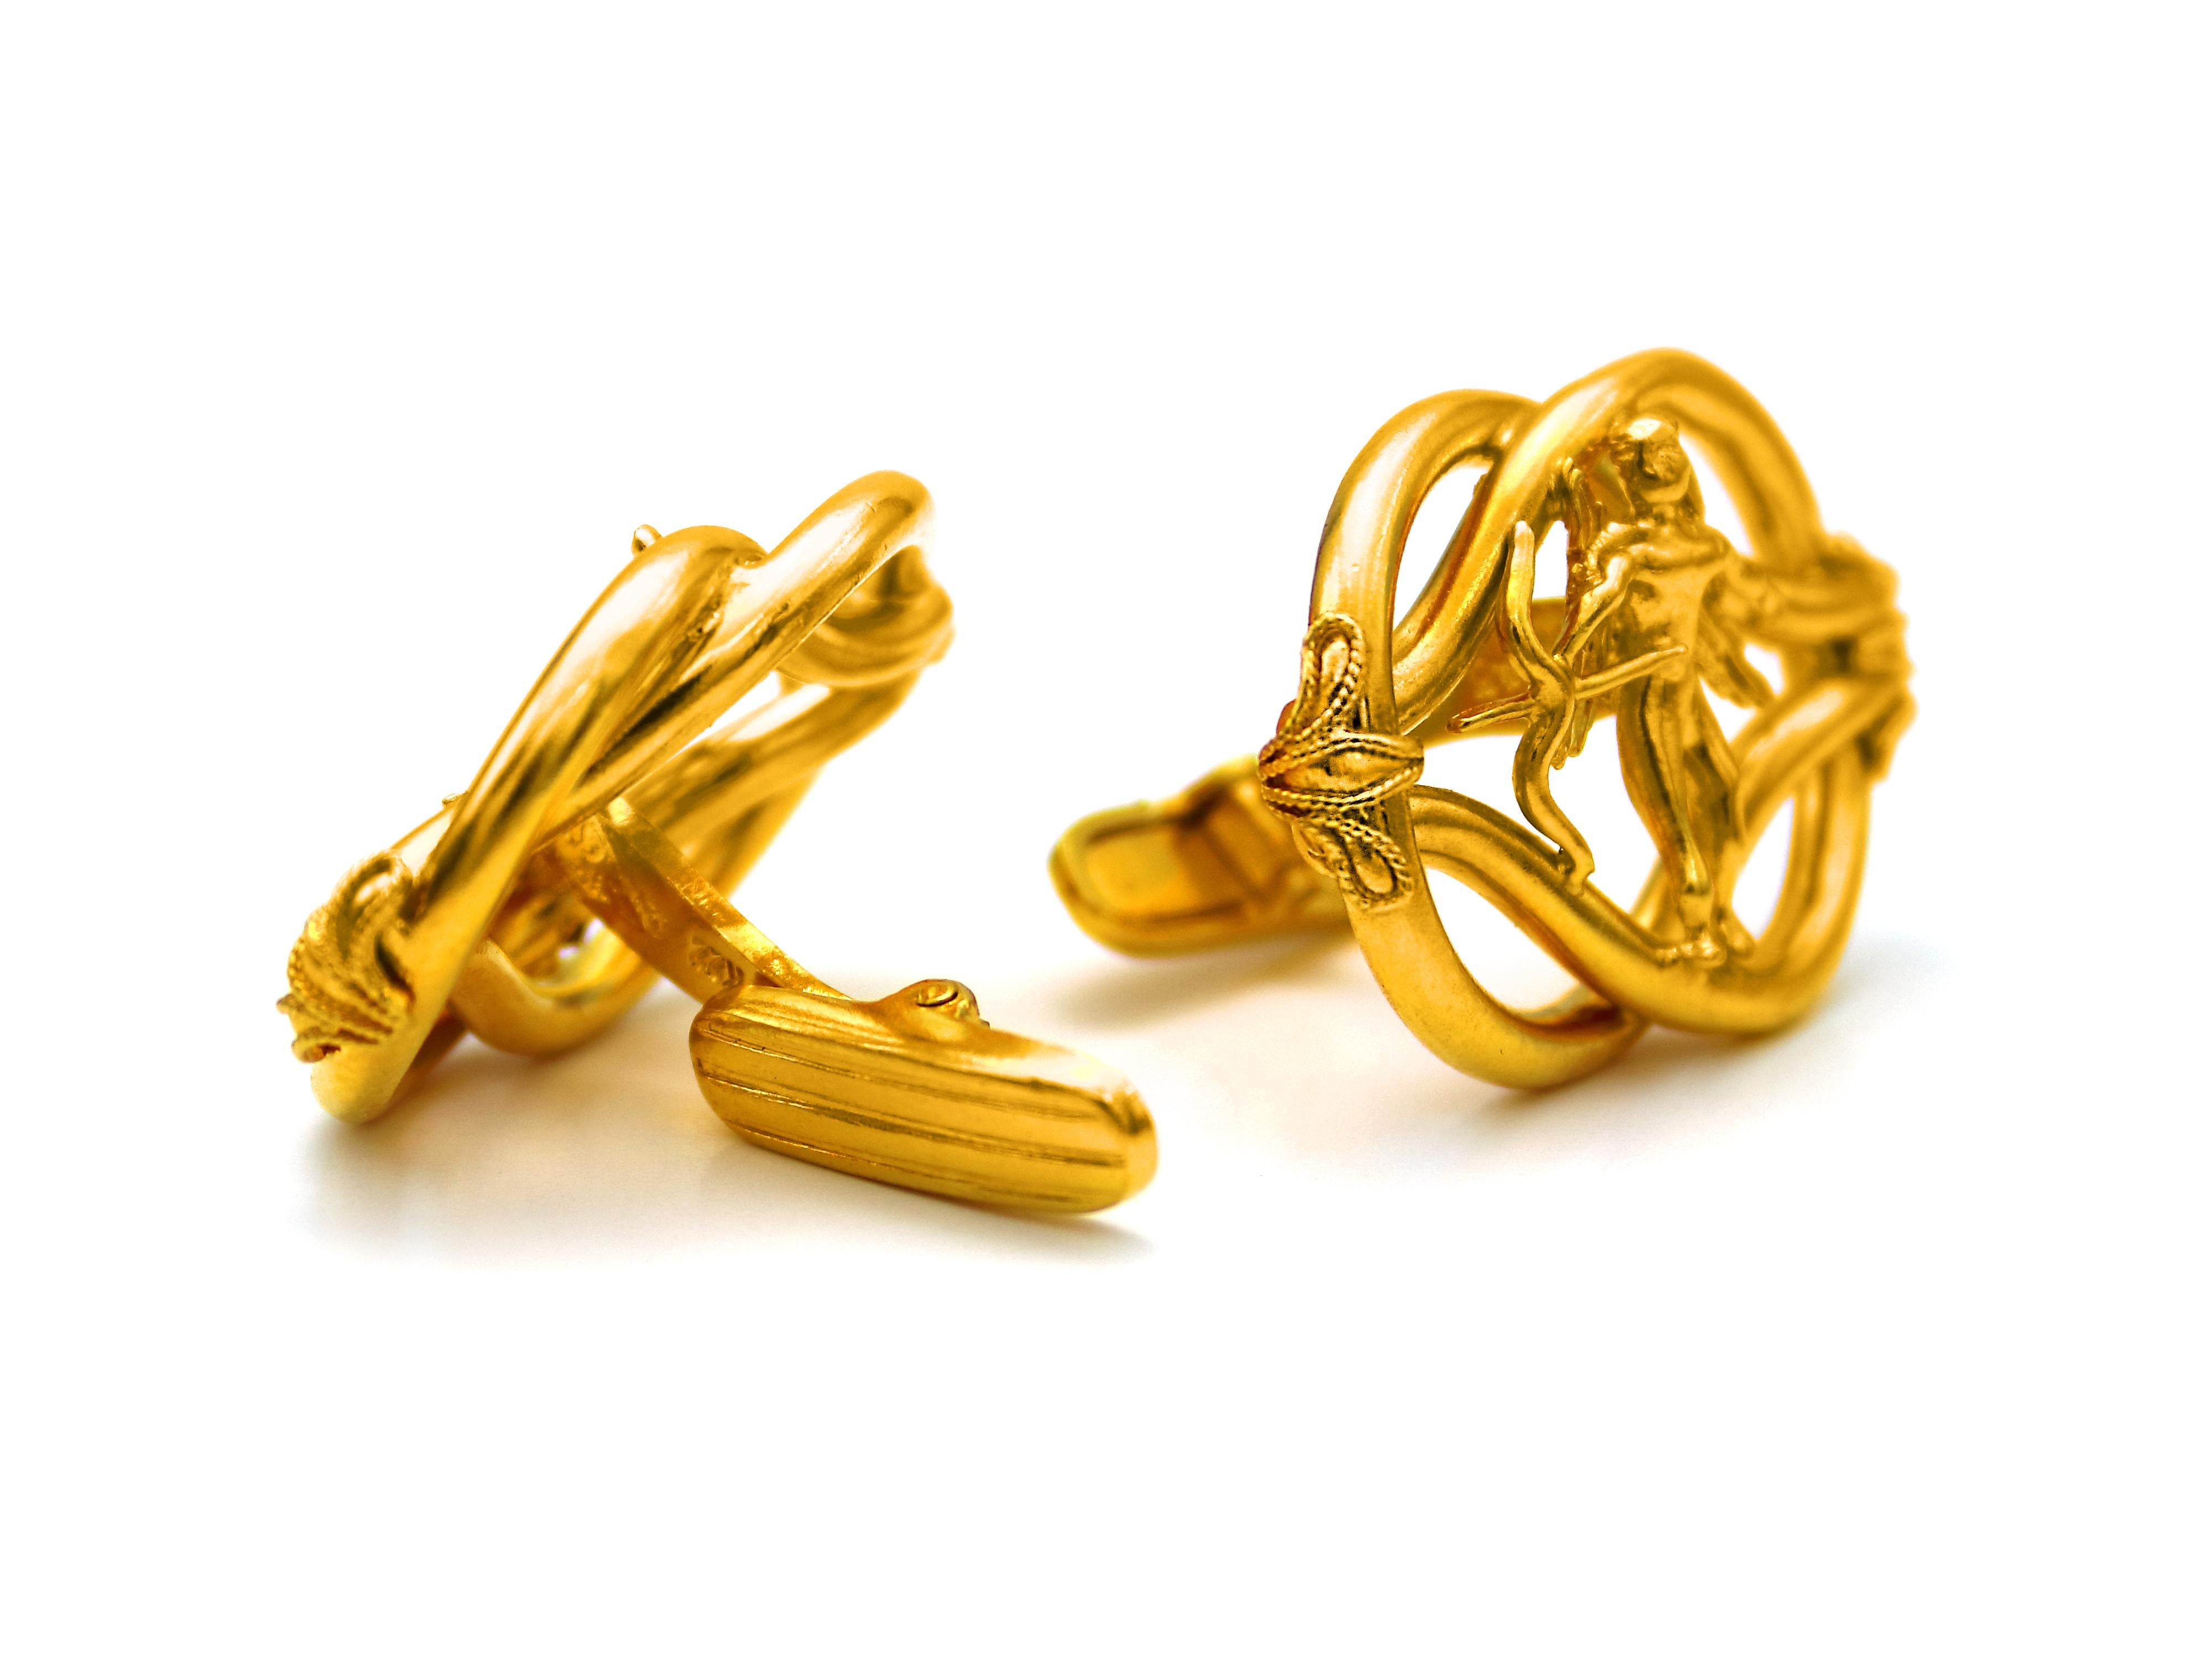 22k gold cufflinks